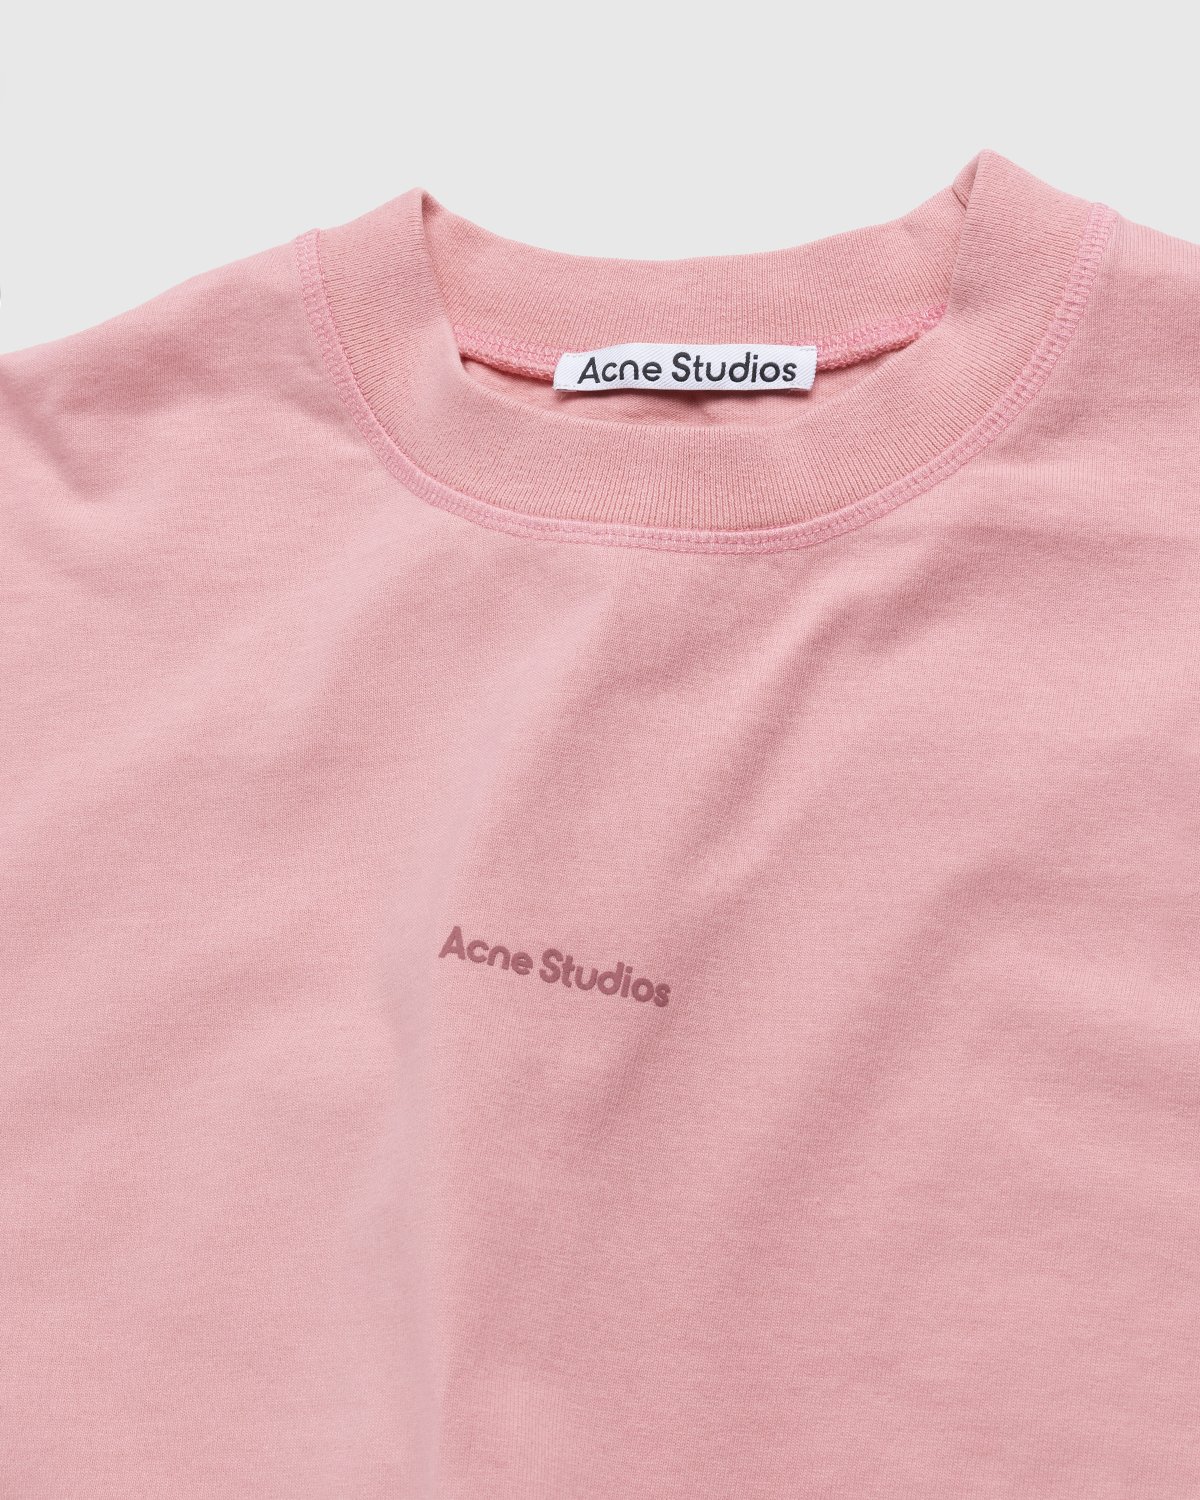 Acne Studios - Logo T-Shirt Pink - Clothing - Pink - Image 3